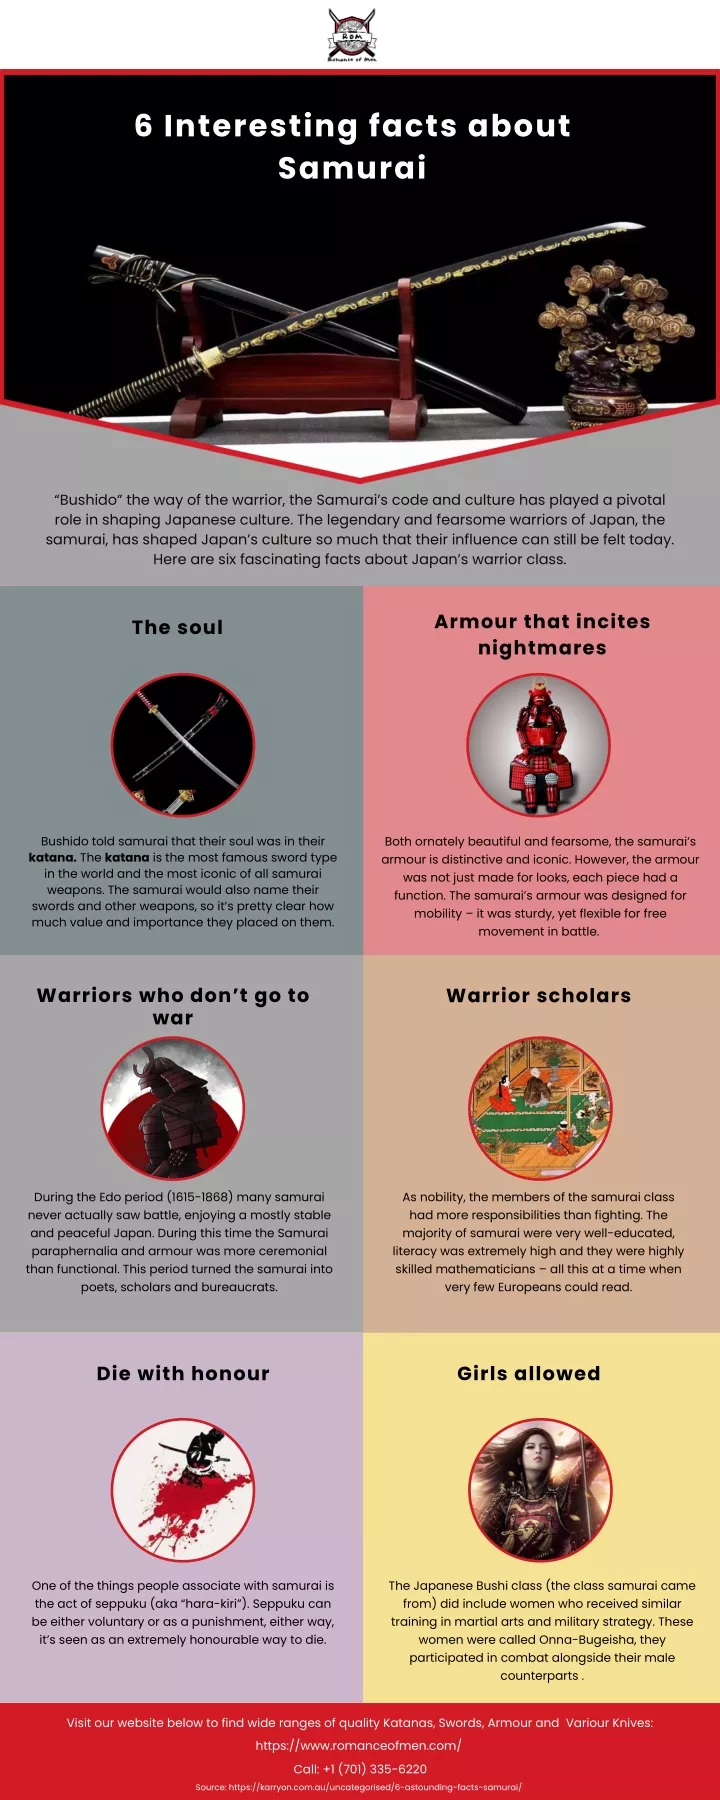 6 interesting facts about samurai